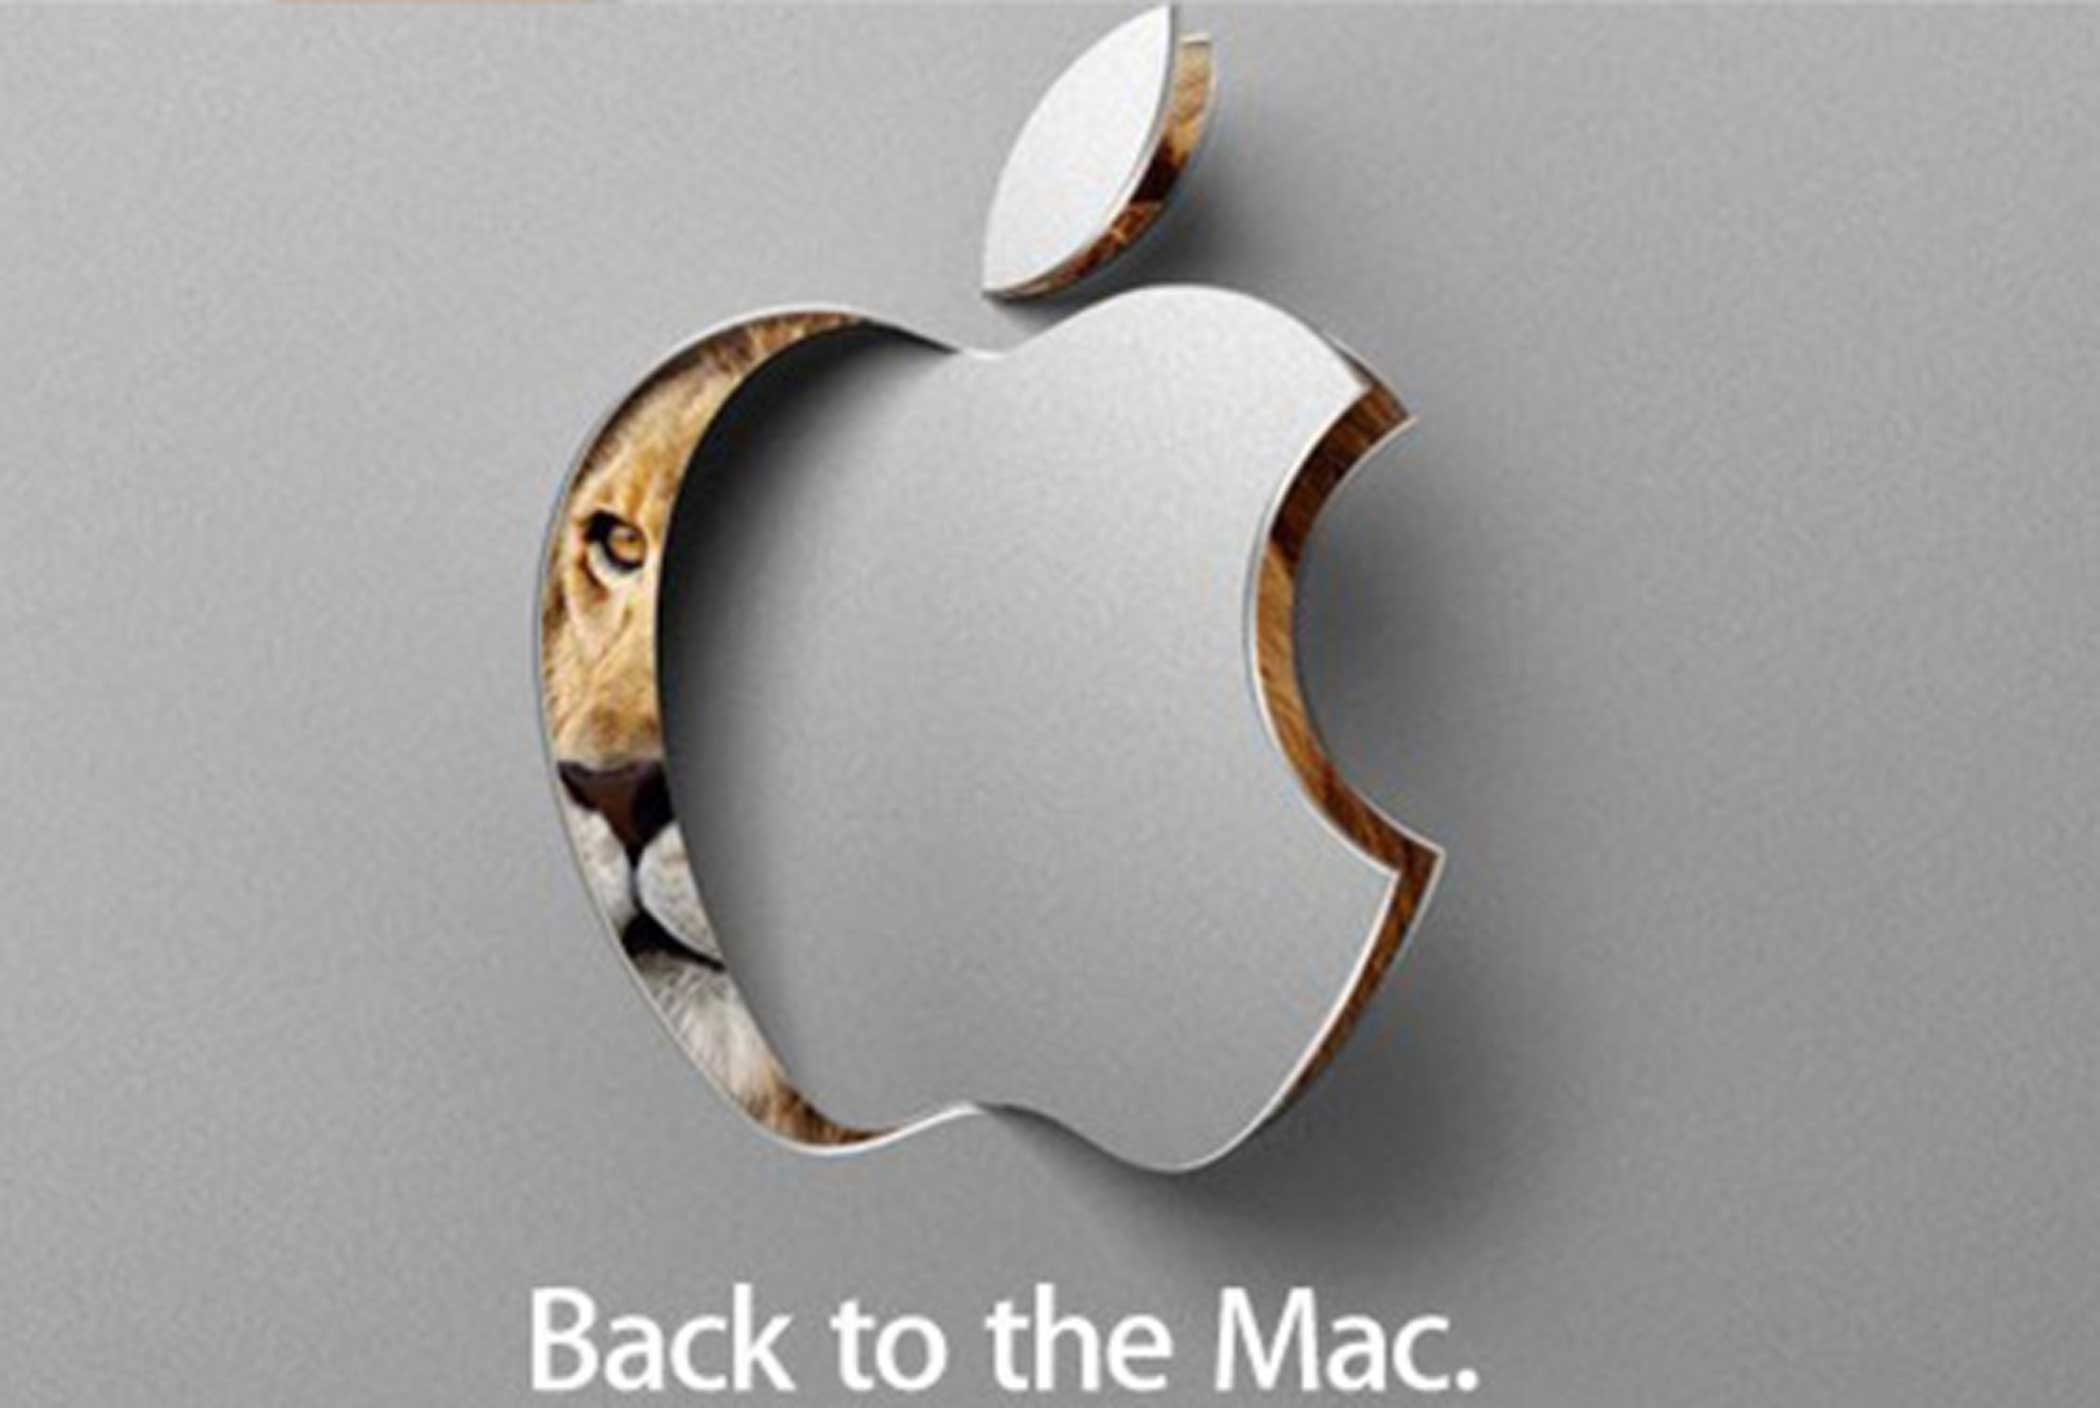 2nd Generation Macbook Air, October 2010, Cupertino